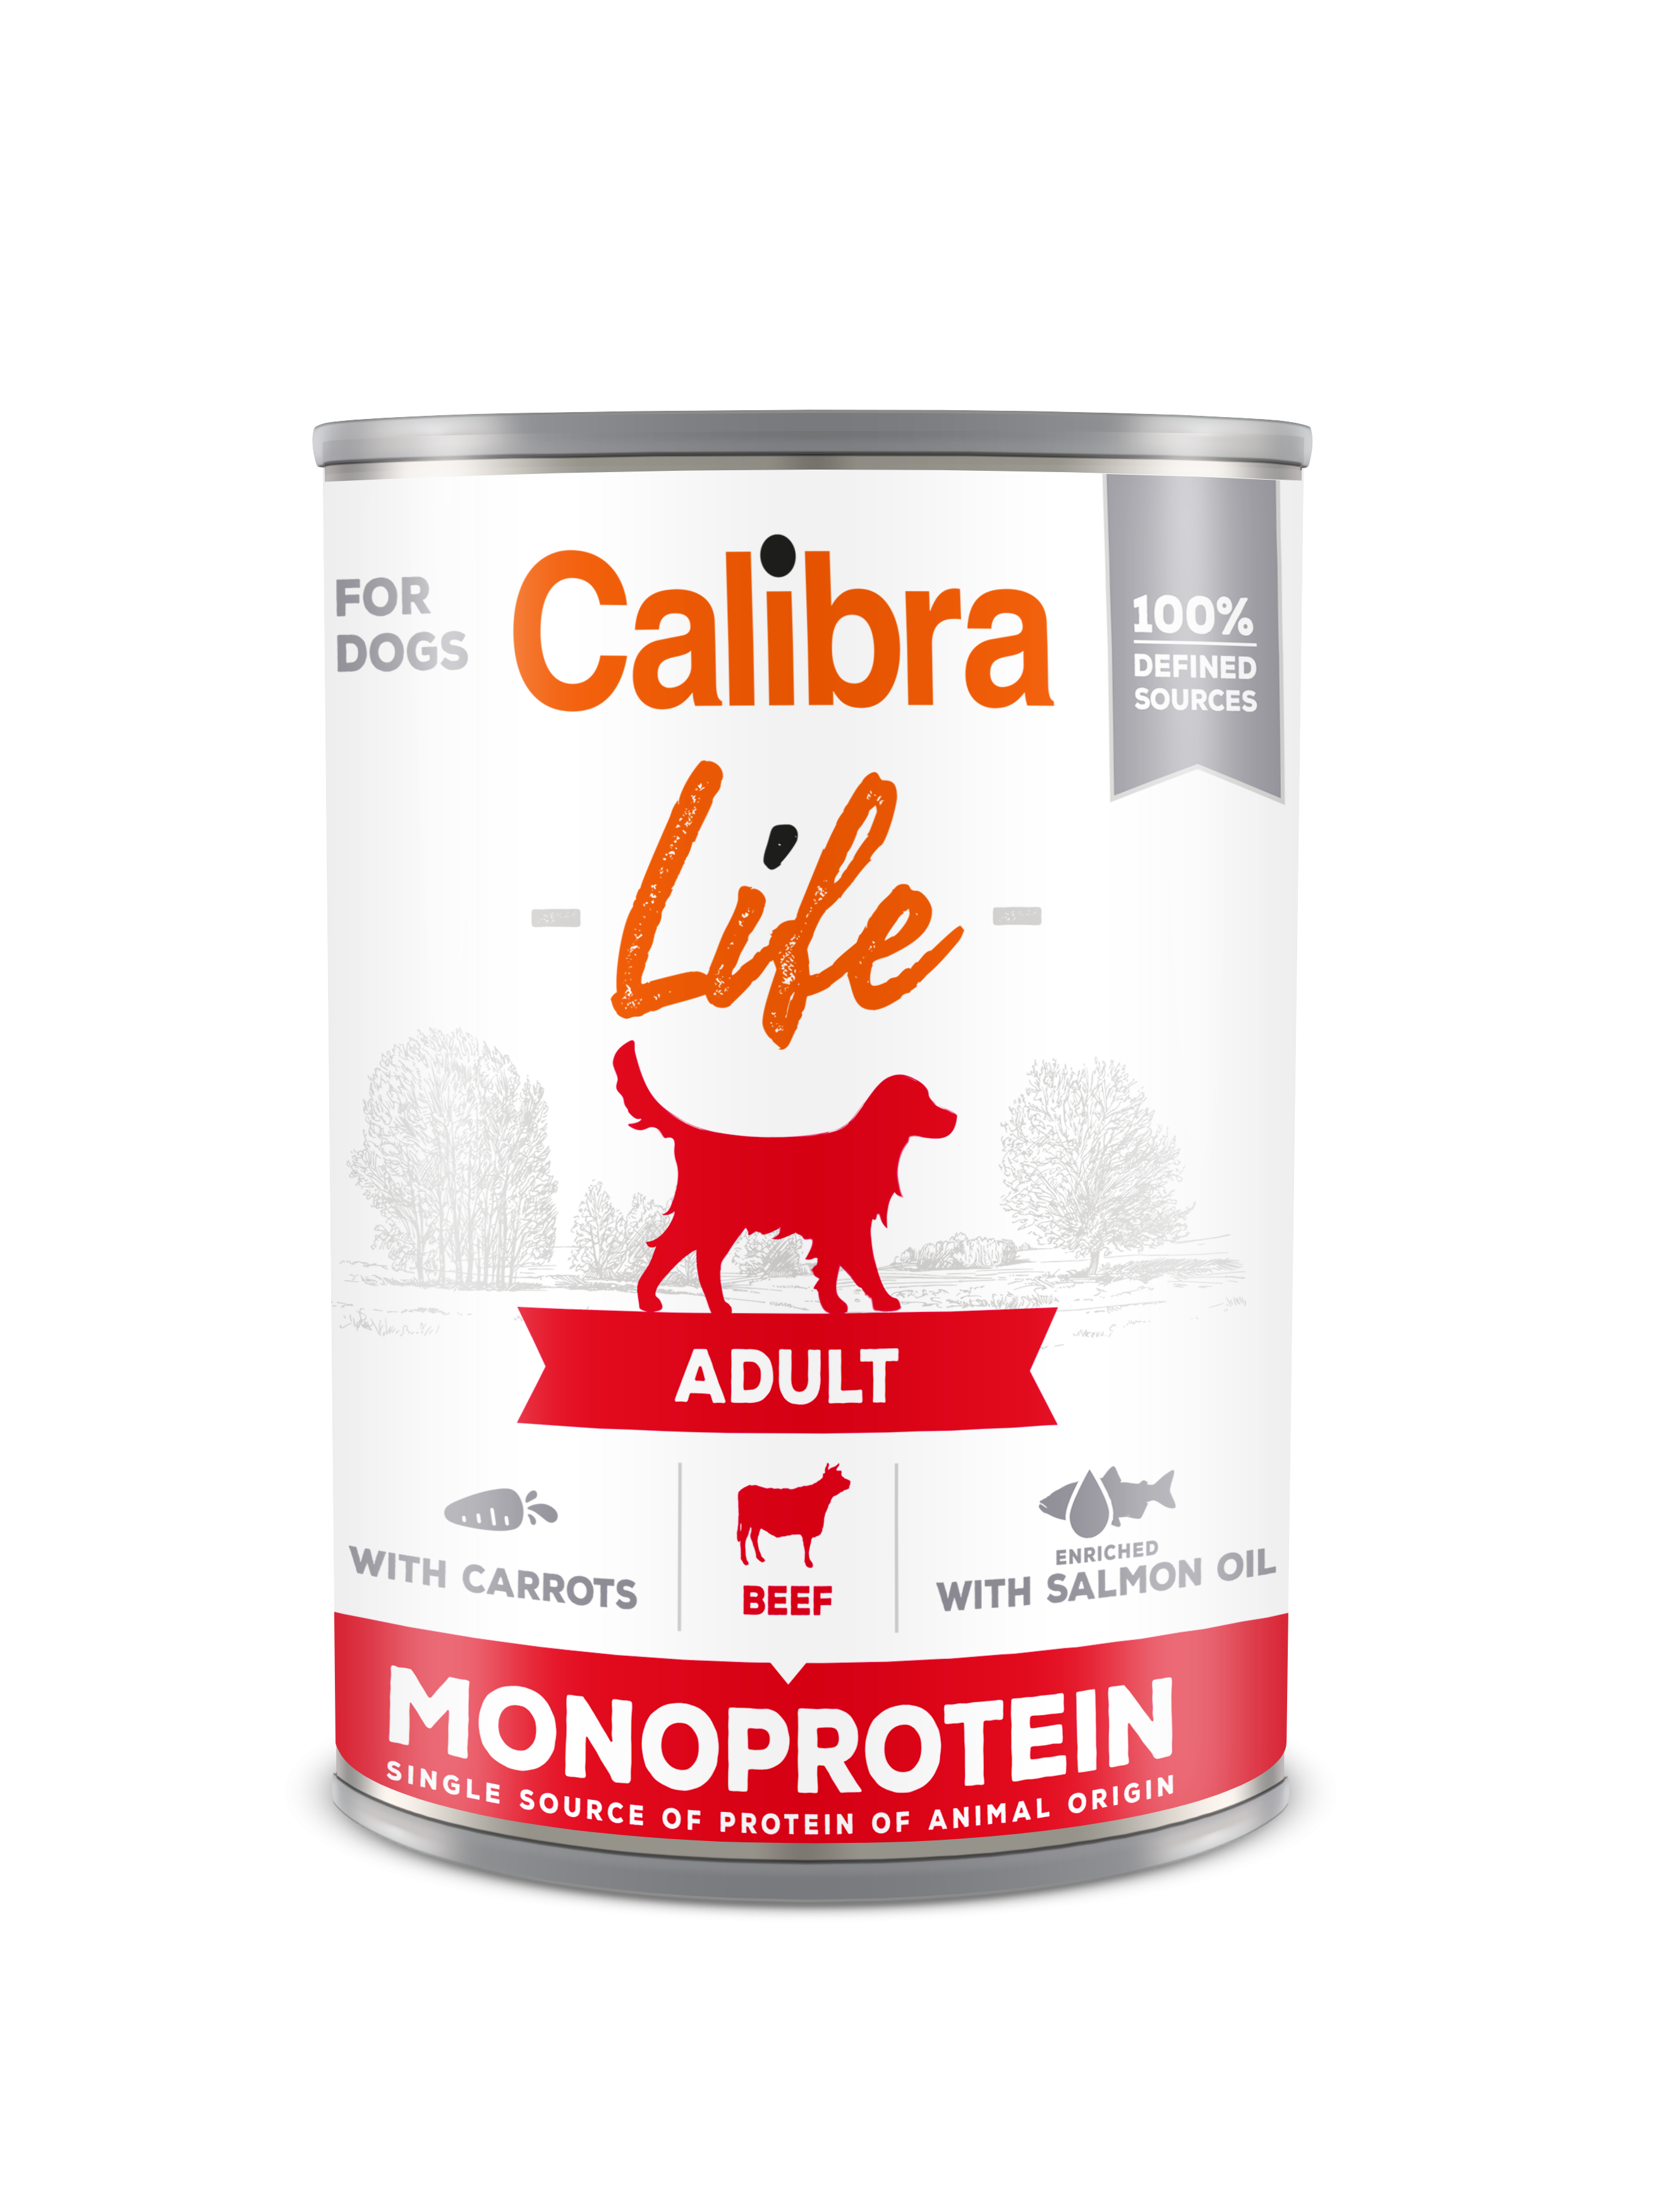 Calibra Dog Life Adult Beef with Carrots 400 g, conserva petmart